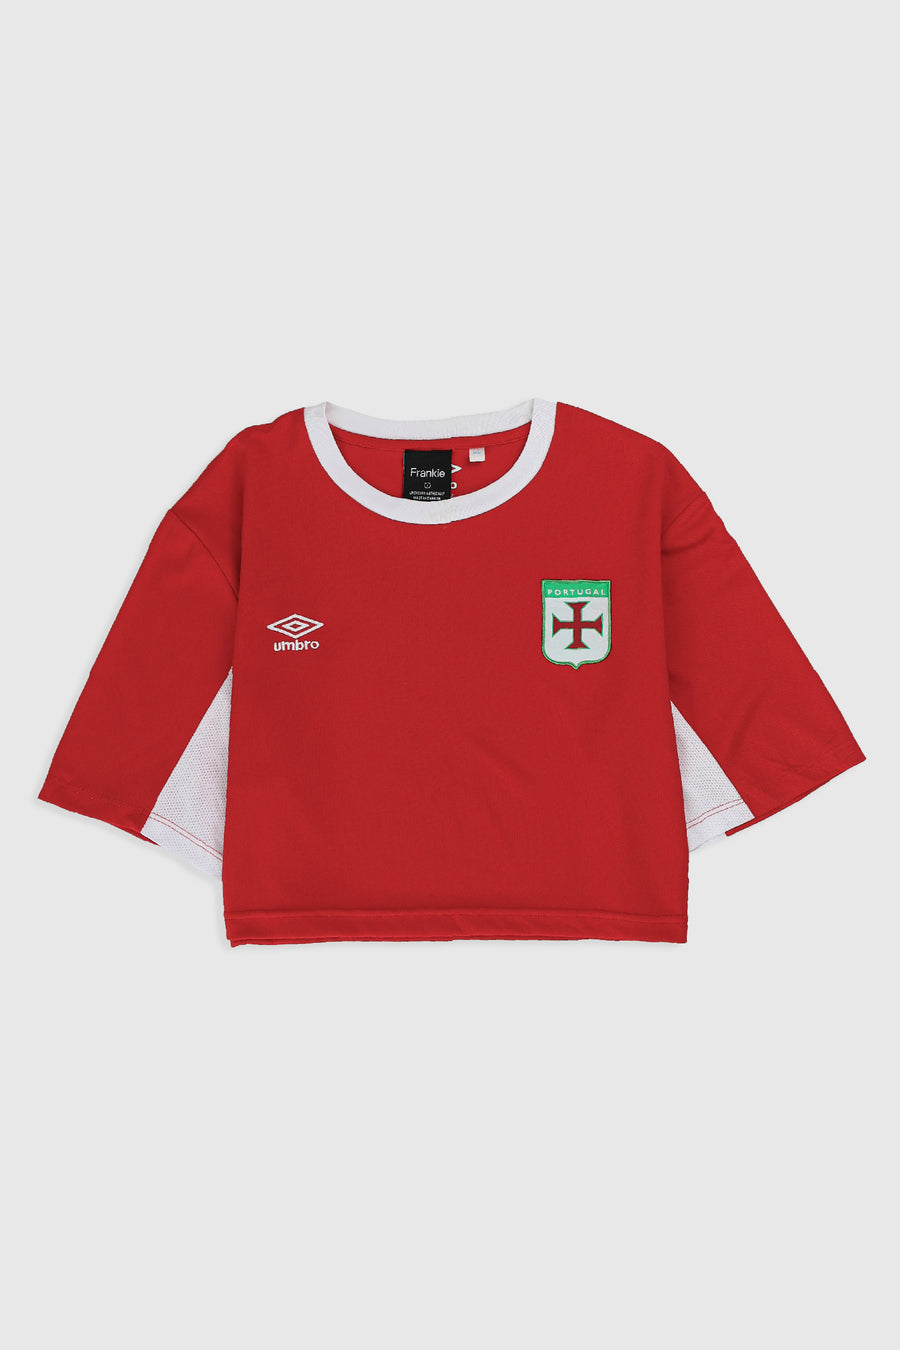 Rework Crop Portugal Soccer Jersey - L